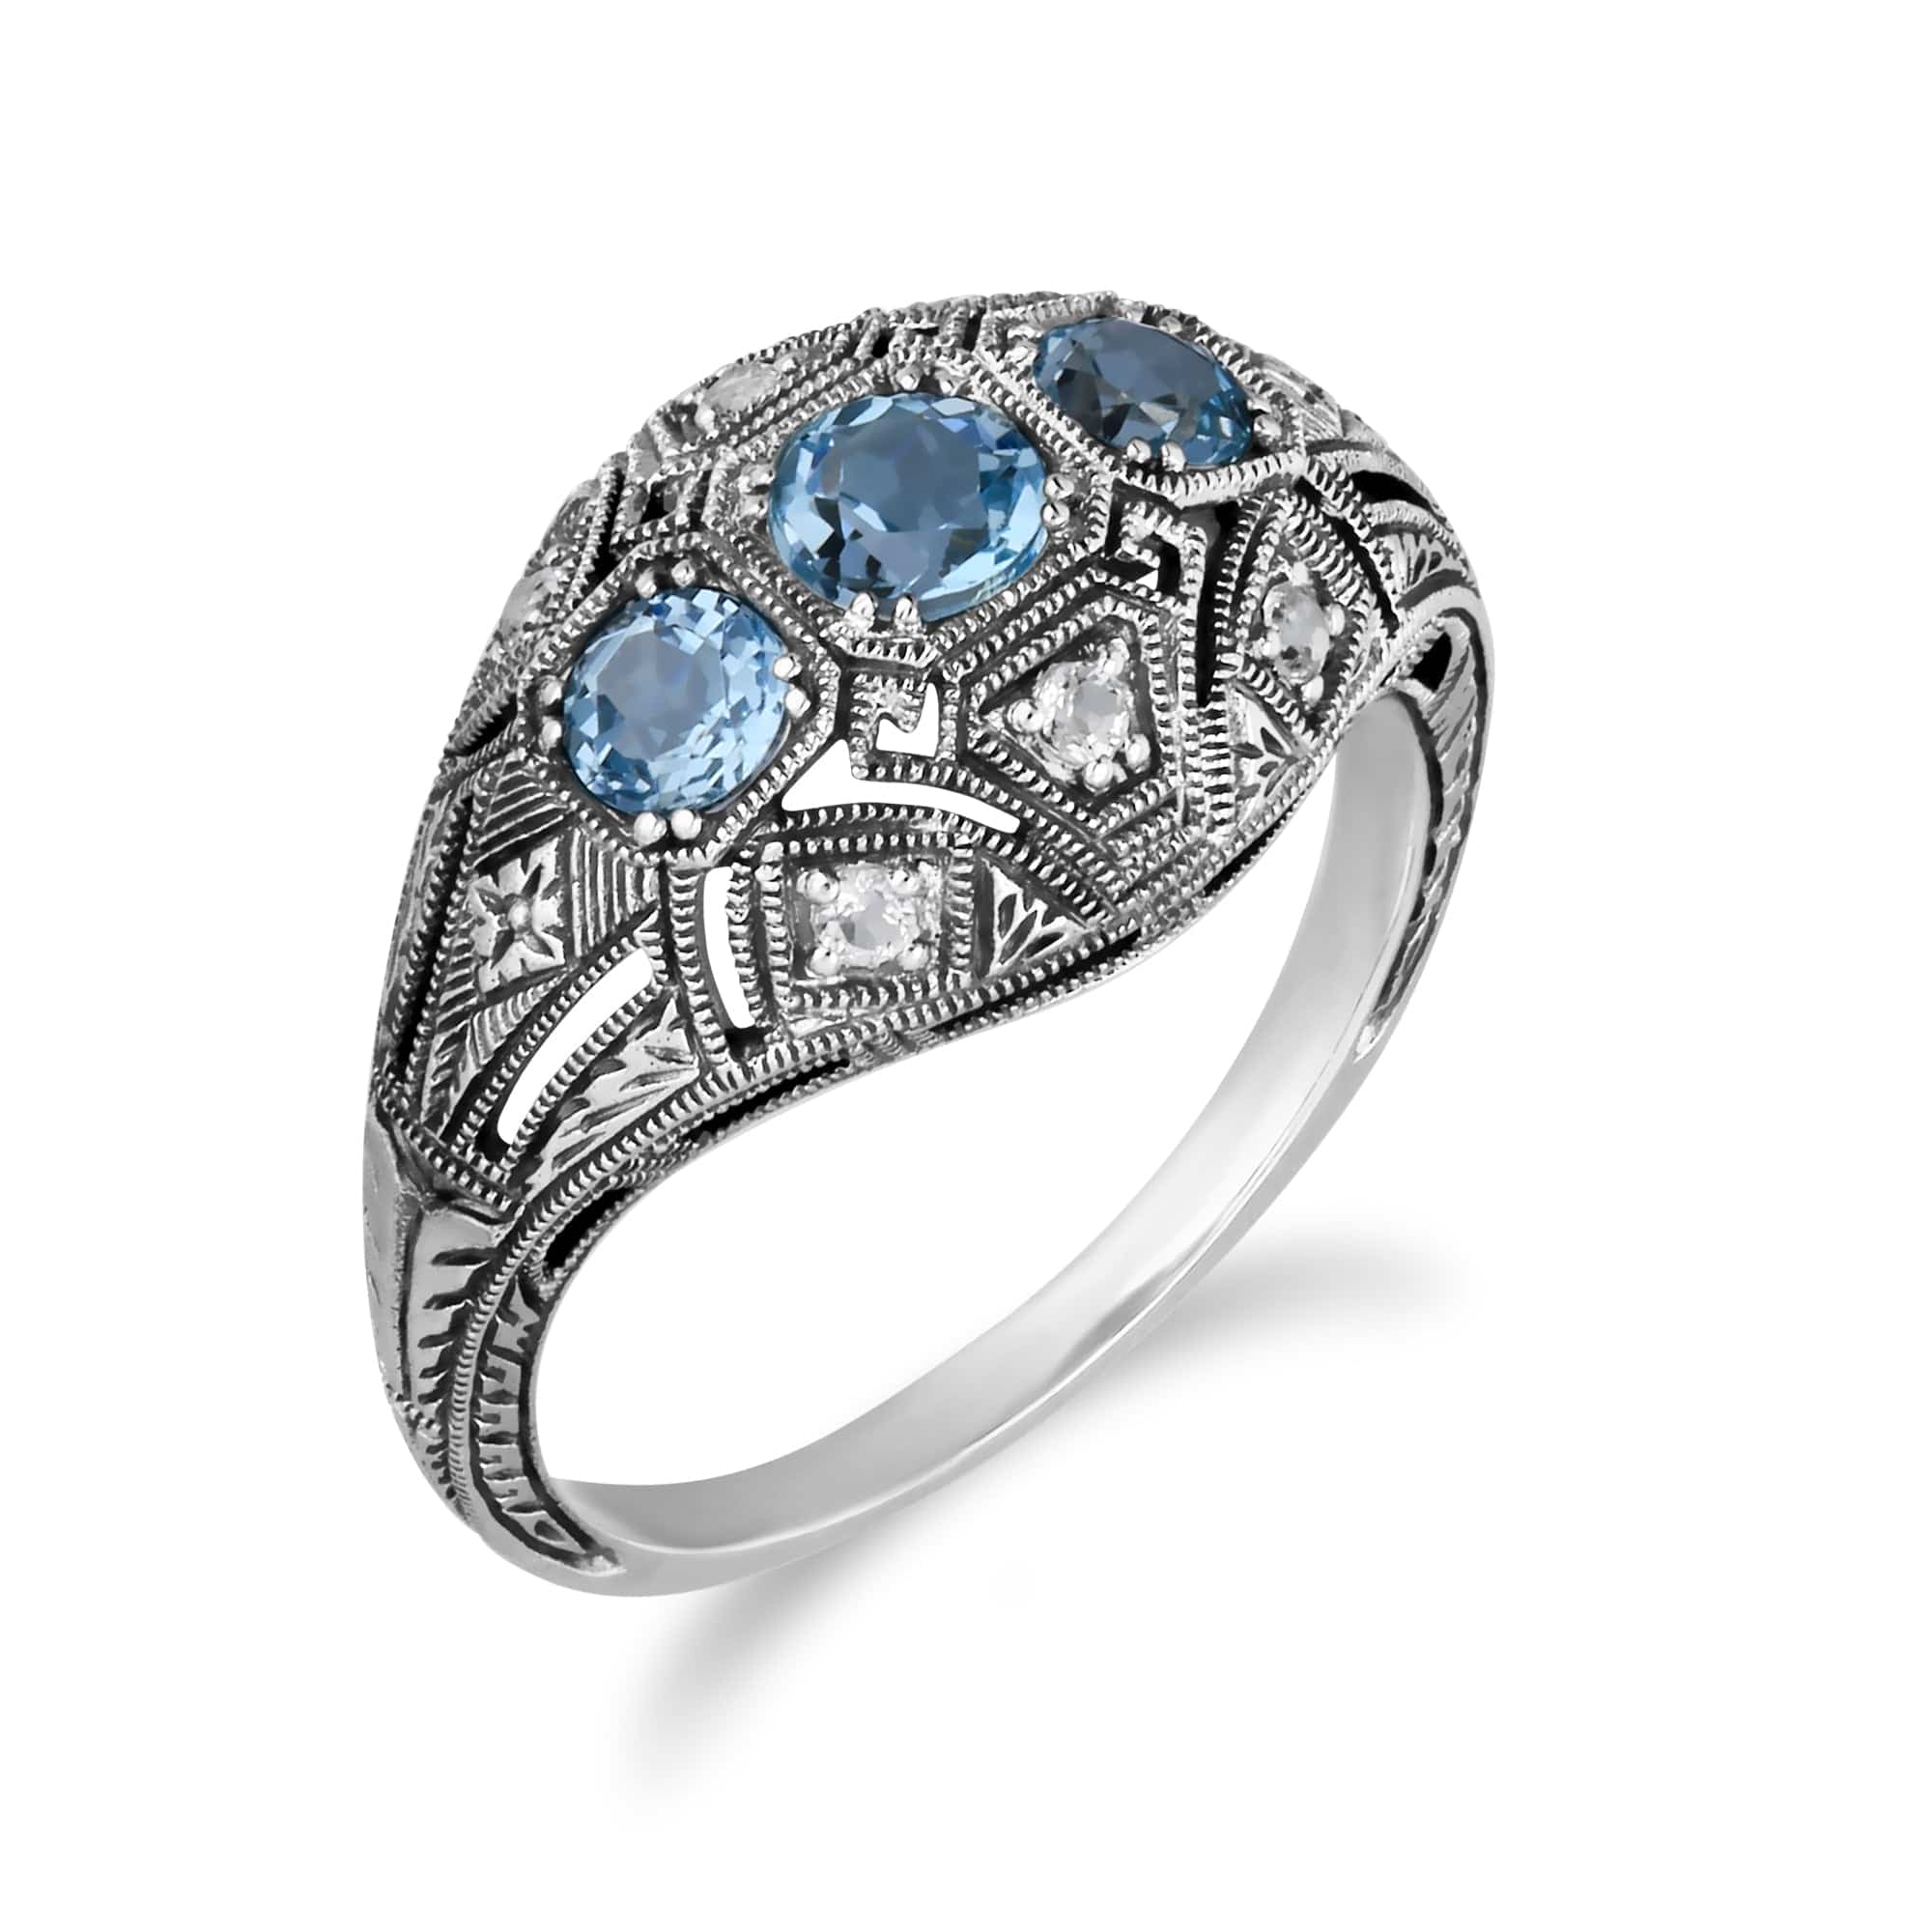 Art Deco Style Round Blue & White Topaz Three Stone Ring in 925 Sterling Silver - Gemondo